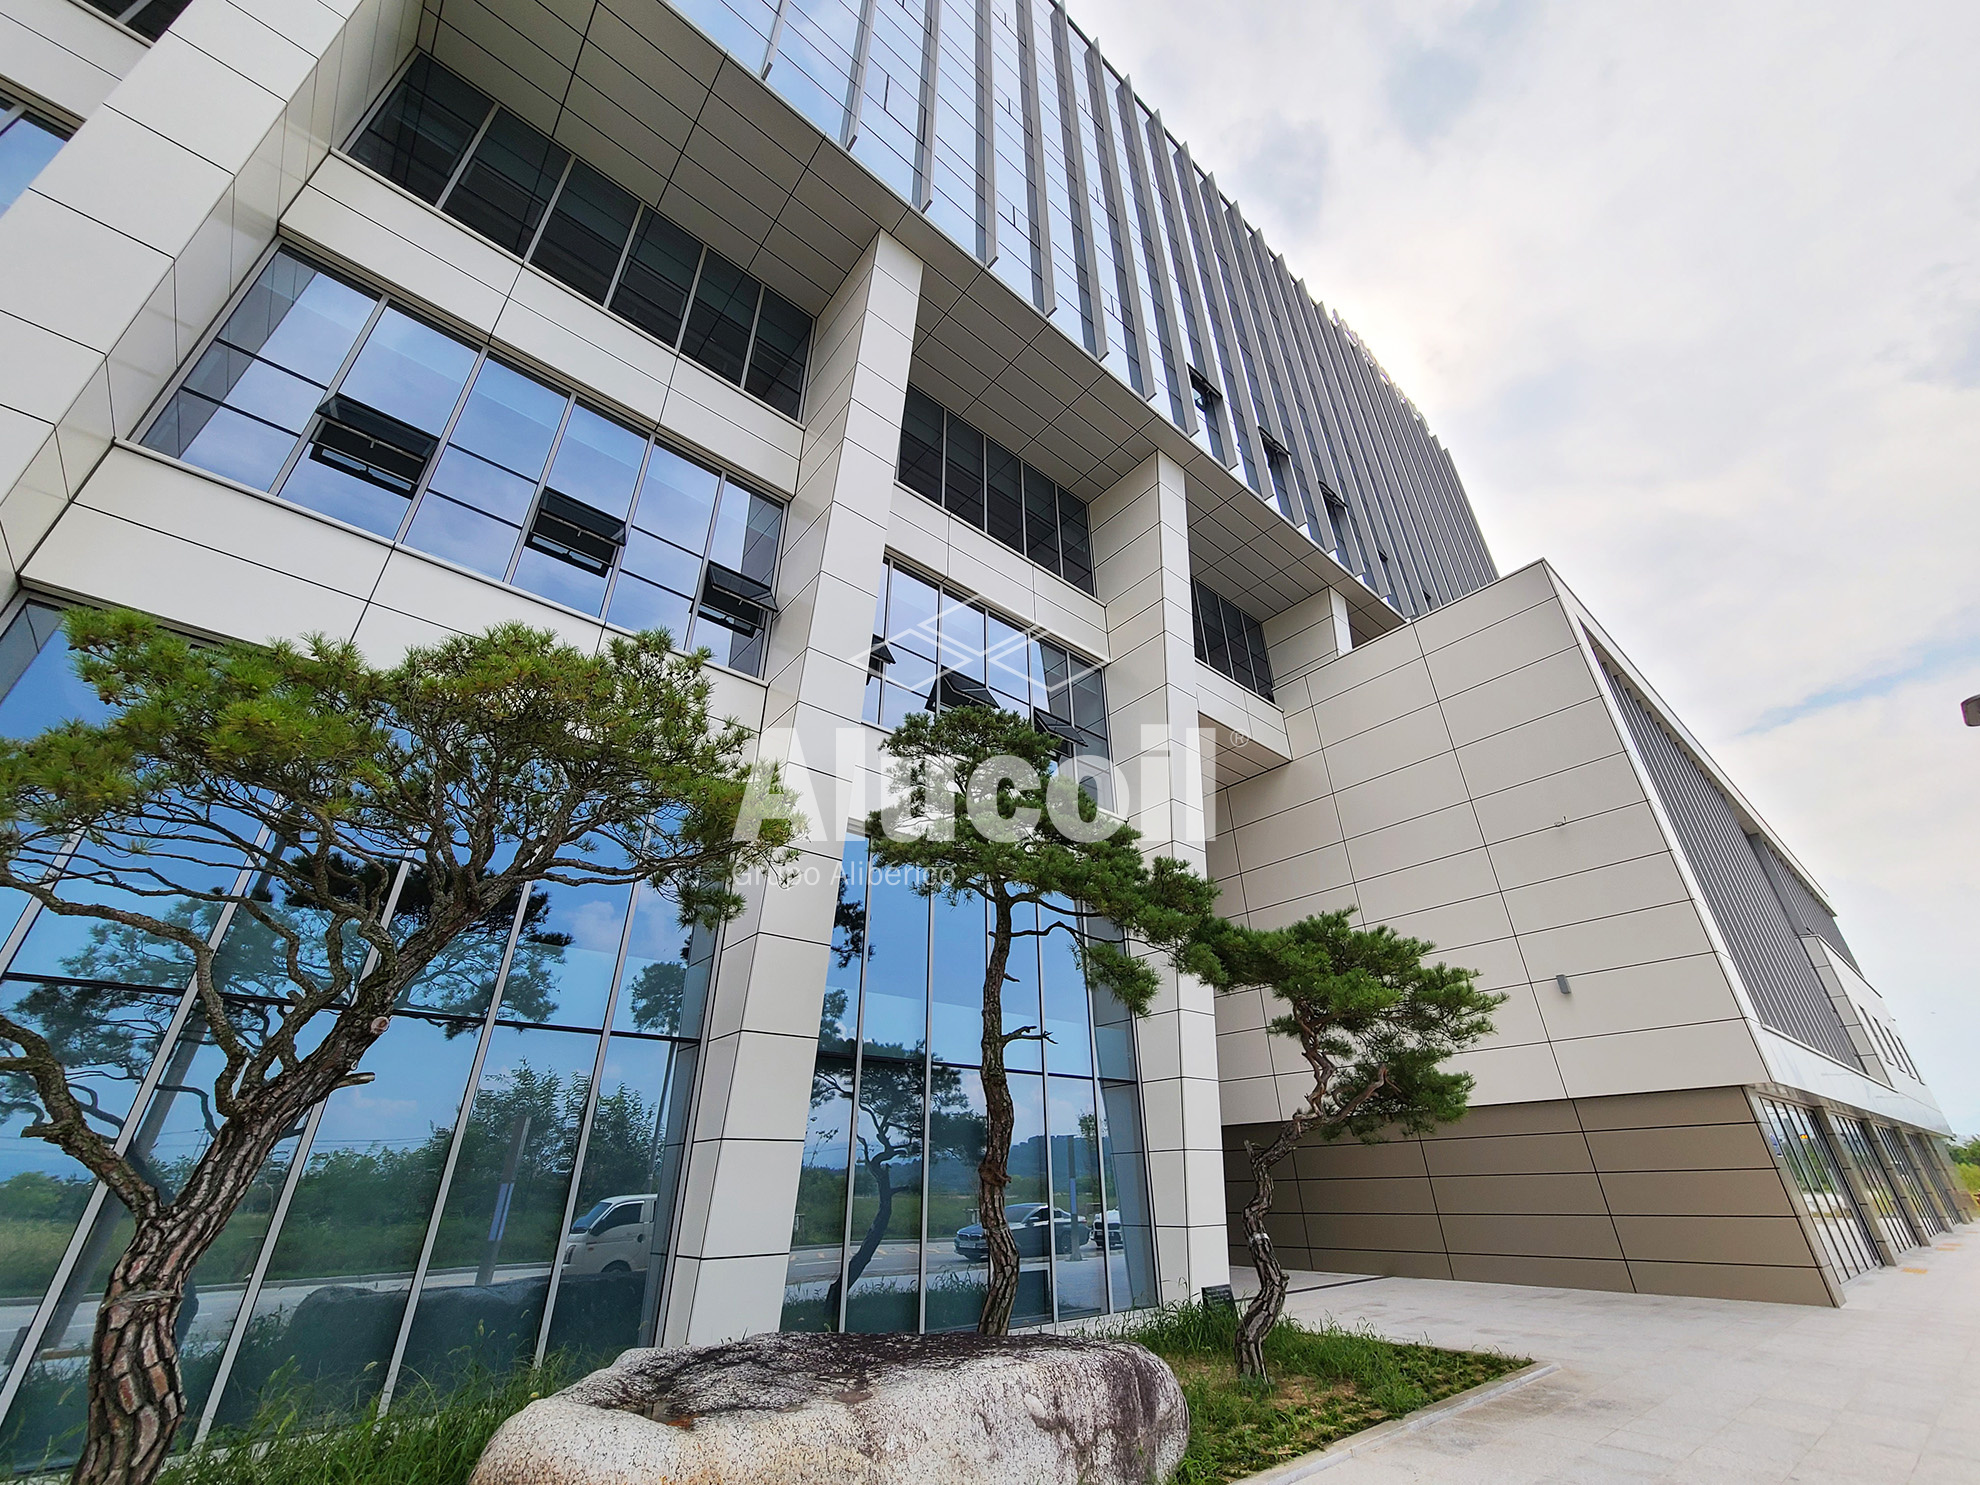 Gimcheon Knowledge Industry Center